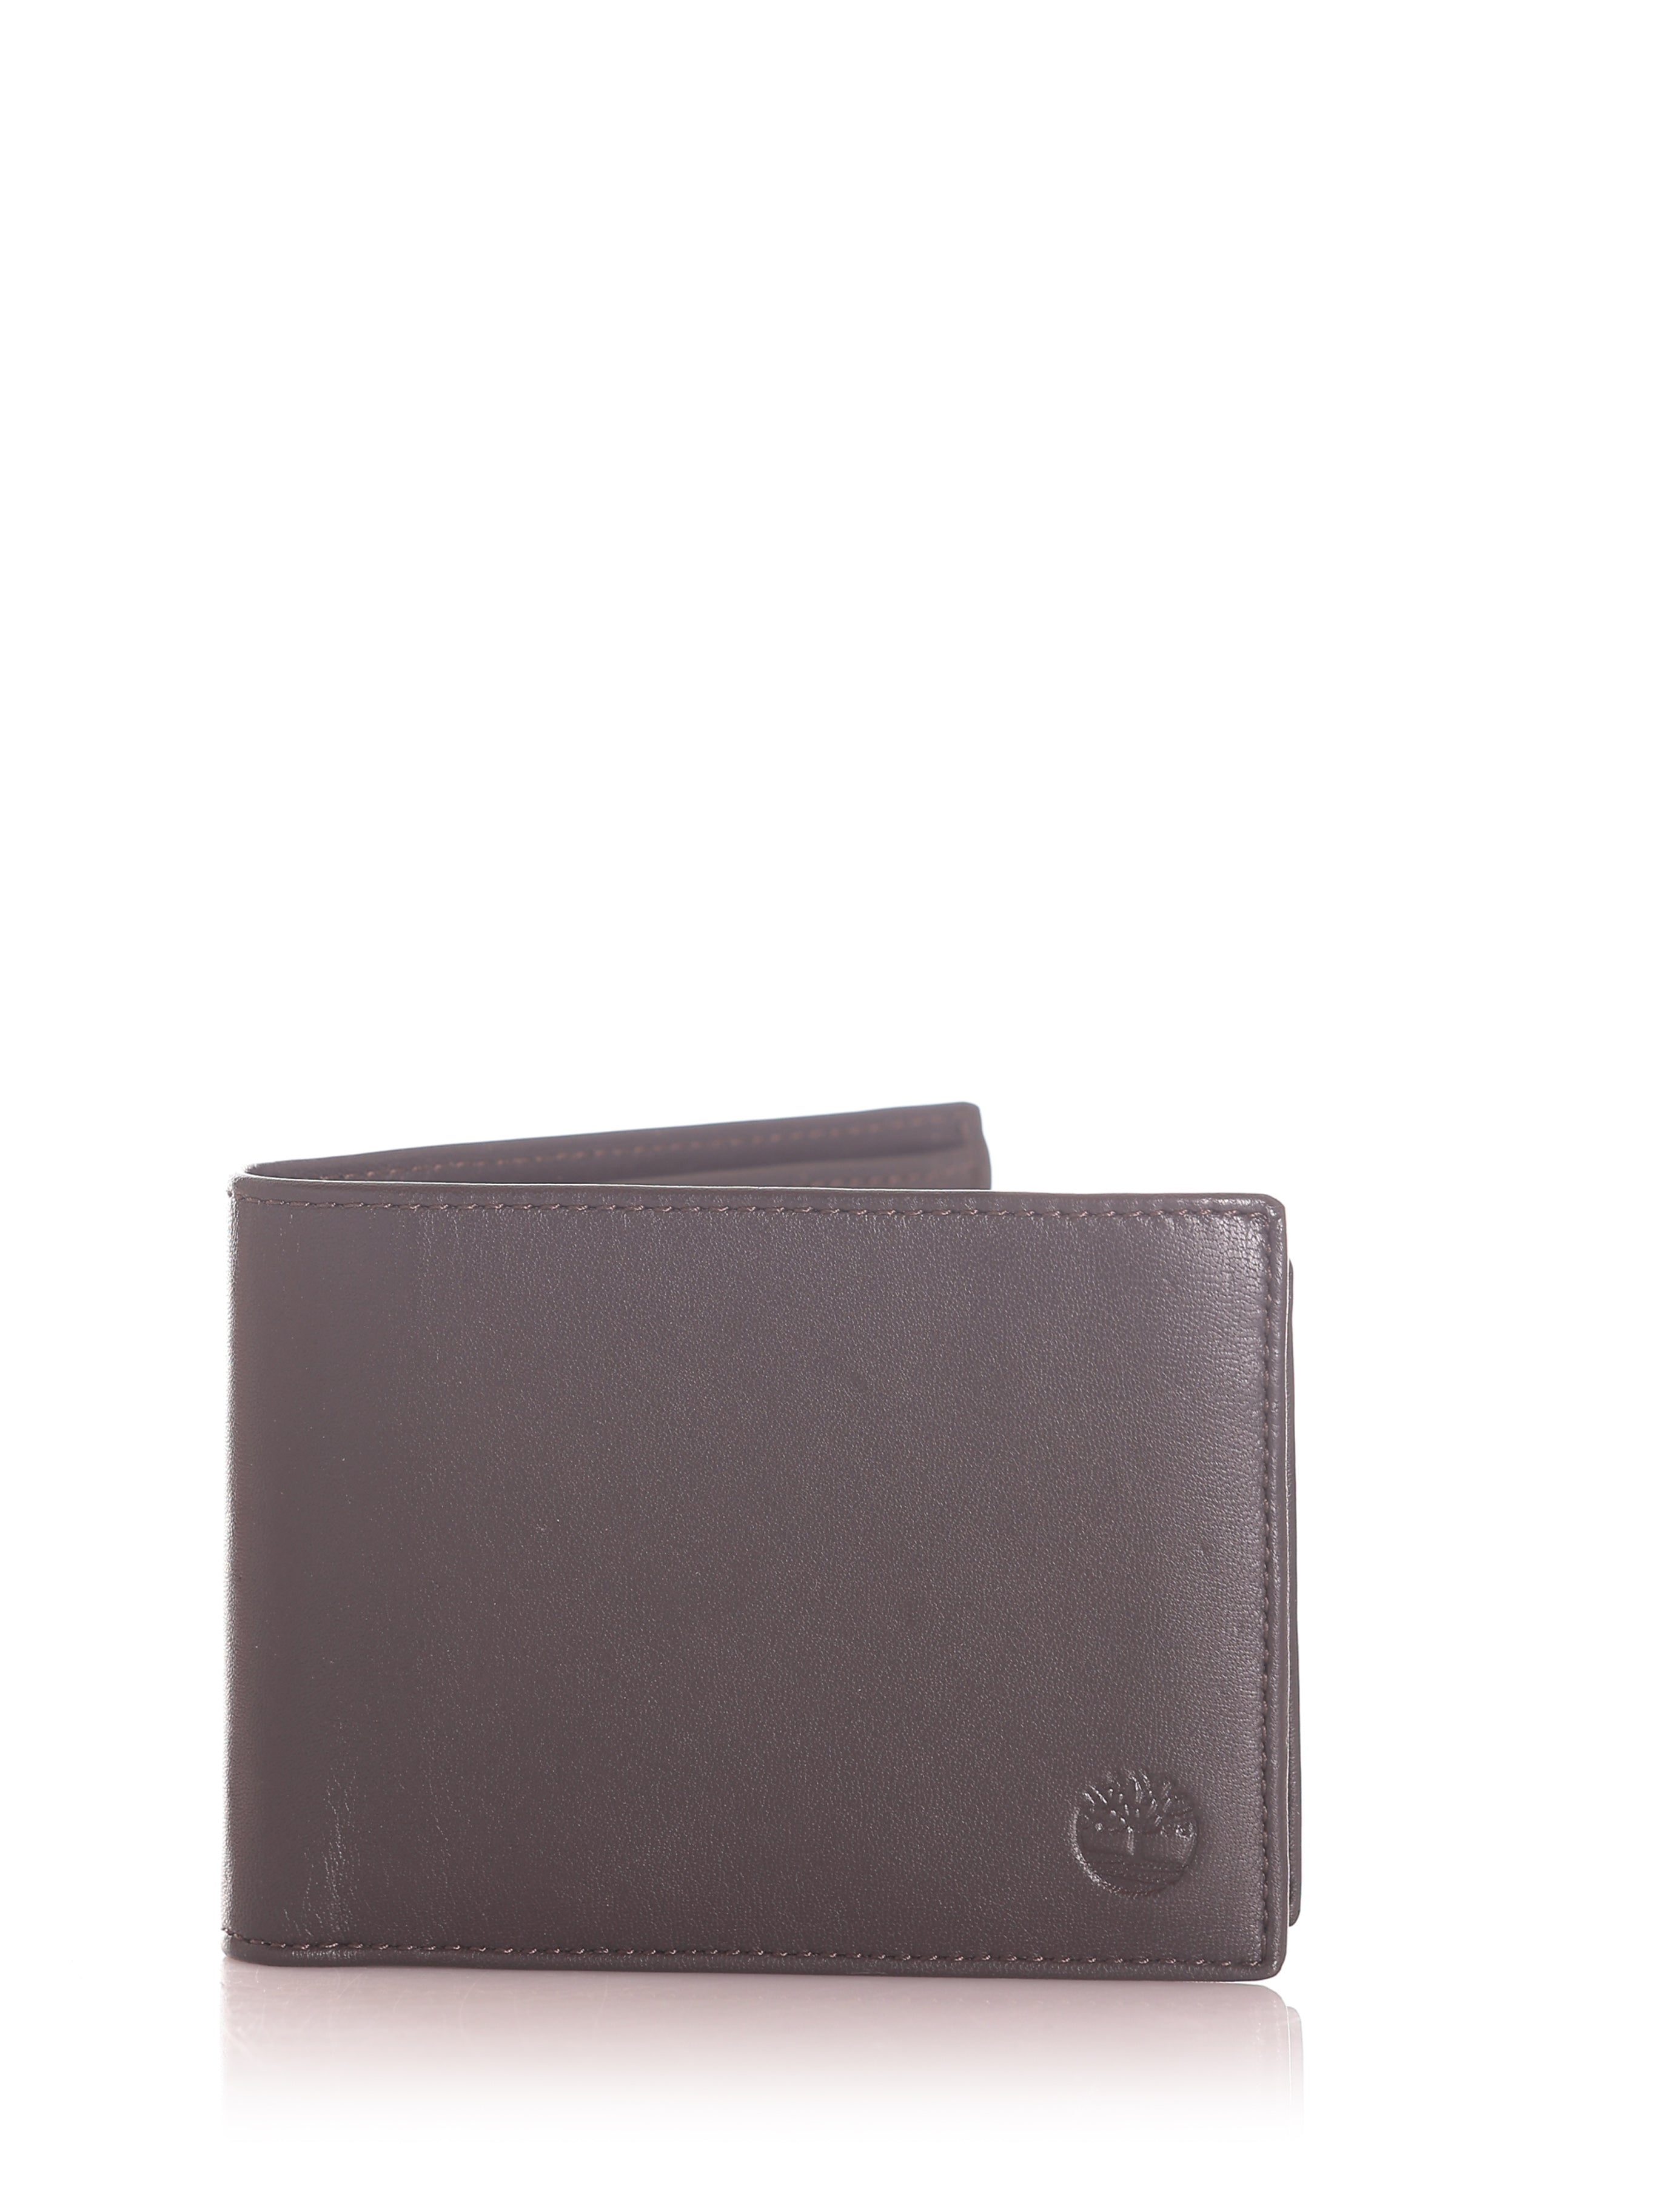 Timberland Wallet Tb0a23u3 Dark Brown